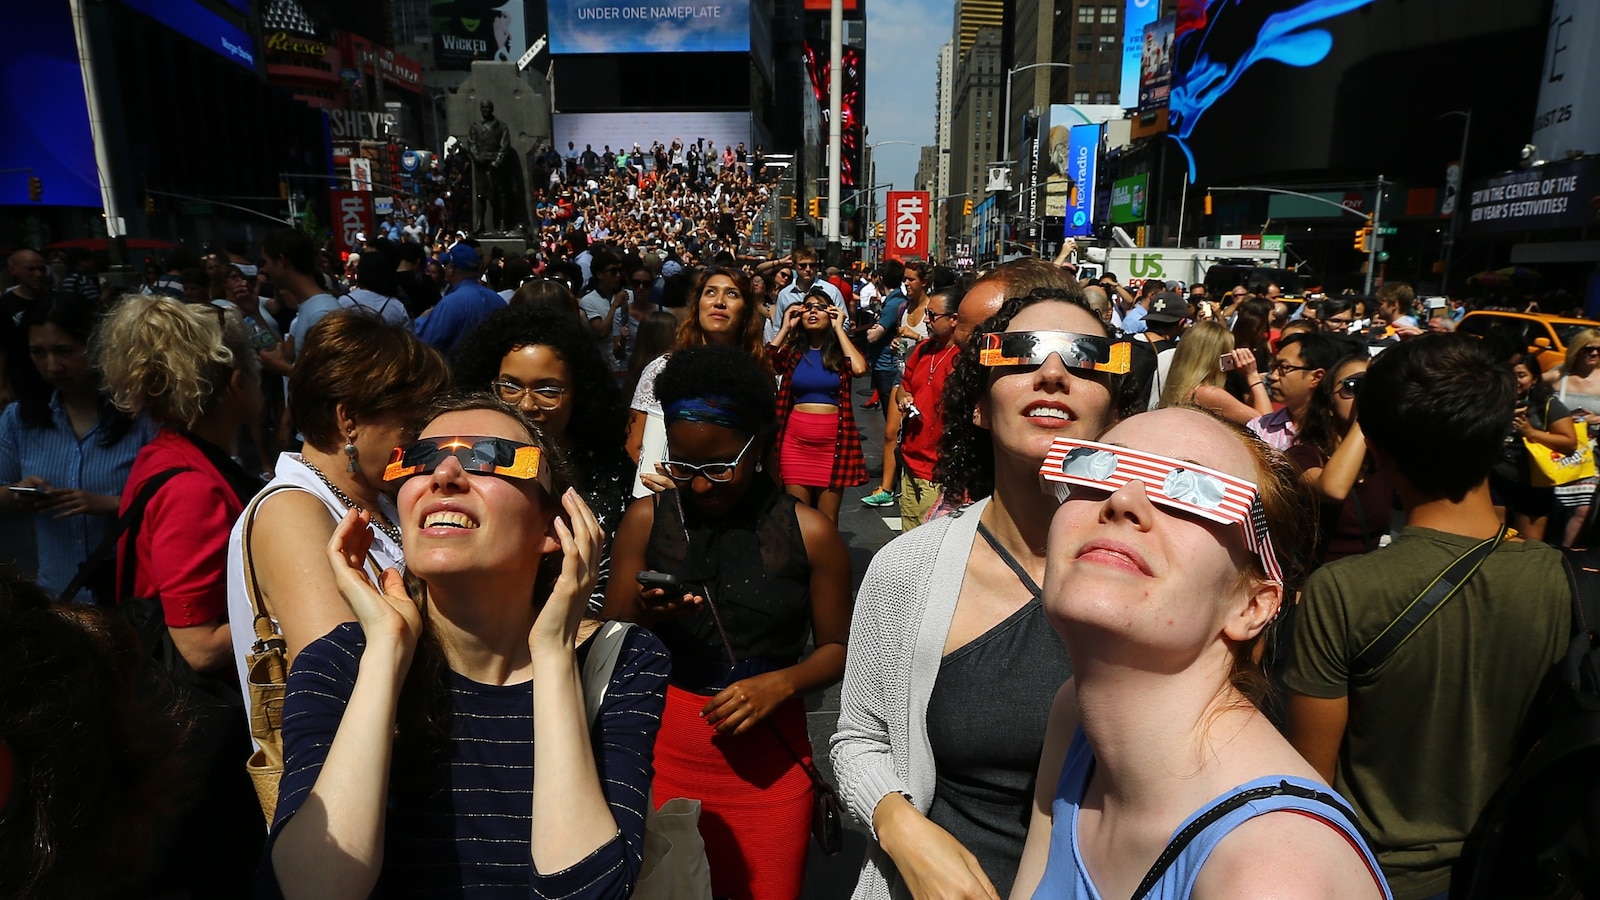 Cosmic yoga, portable toilets: Solar eclipse will deliver ‘tourism boom’ for economy [Video]